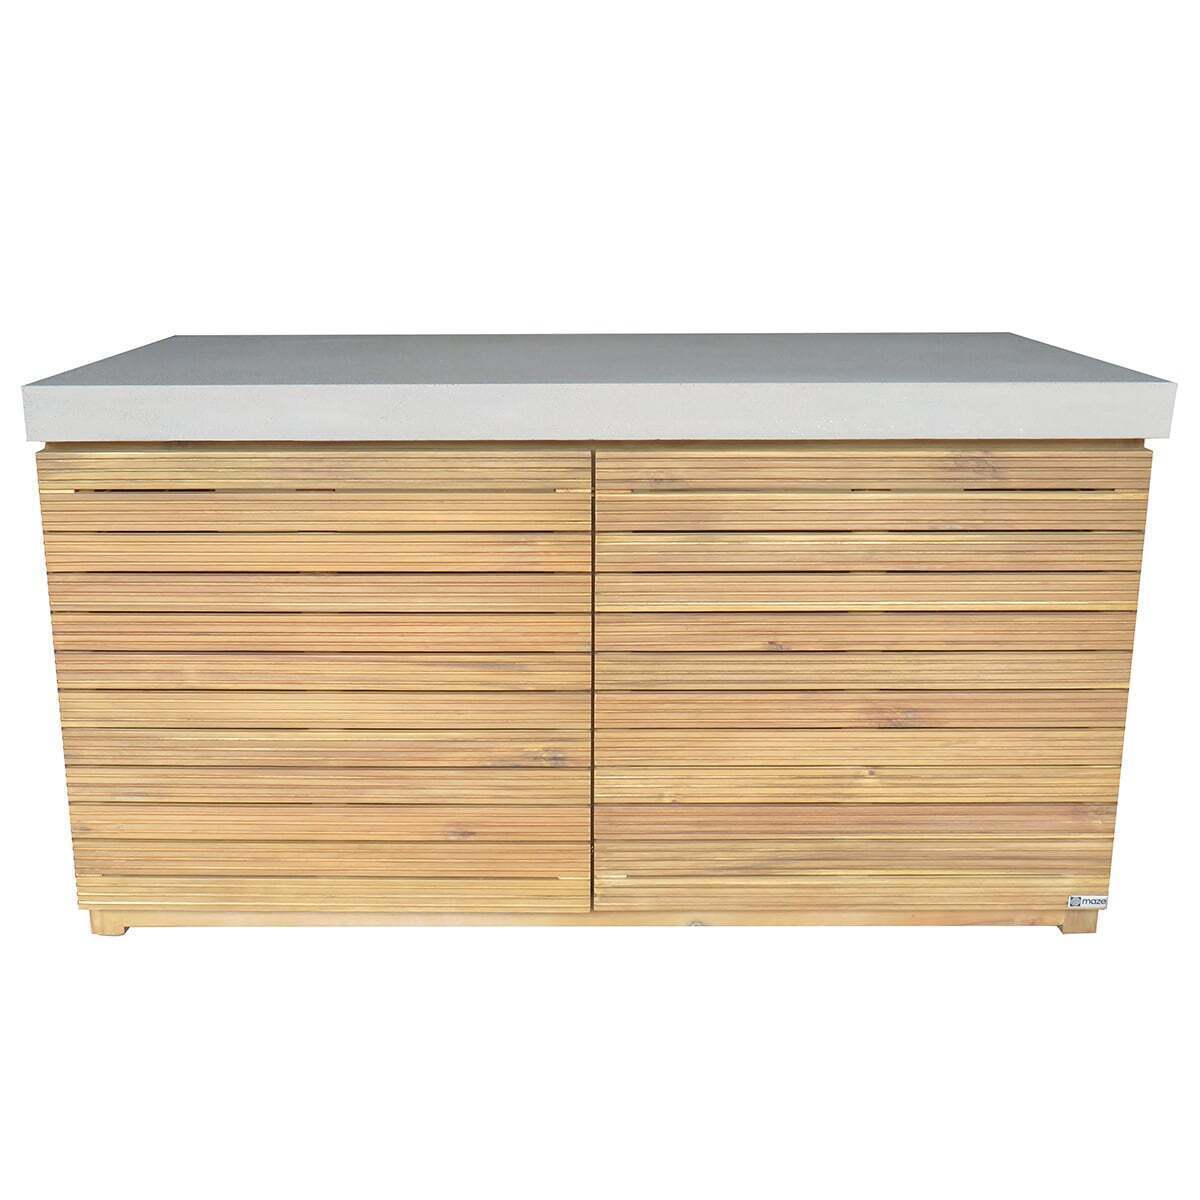 Maze - Bali Outdoor Kitchen Storage Unit - Small Configuration product image